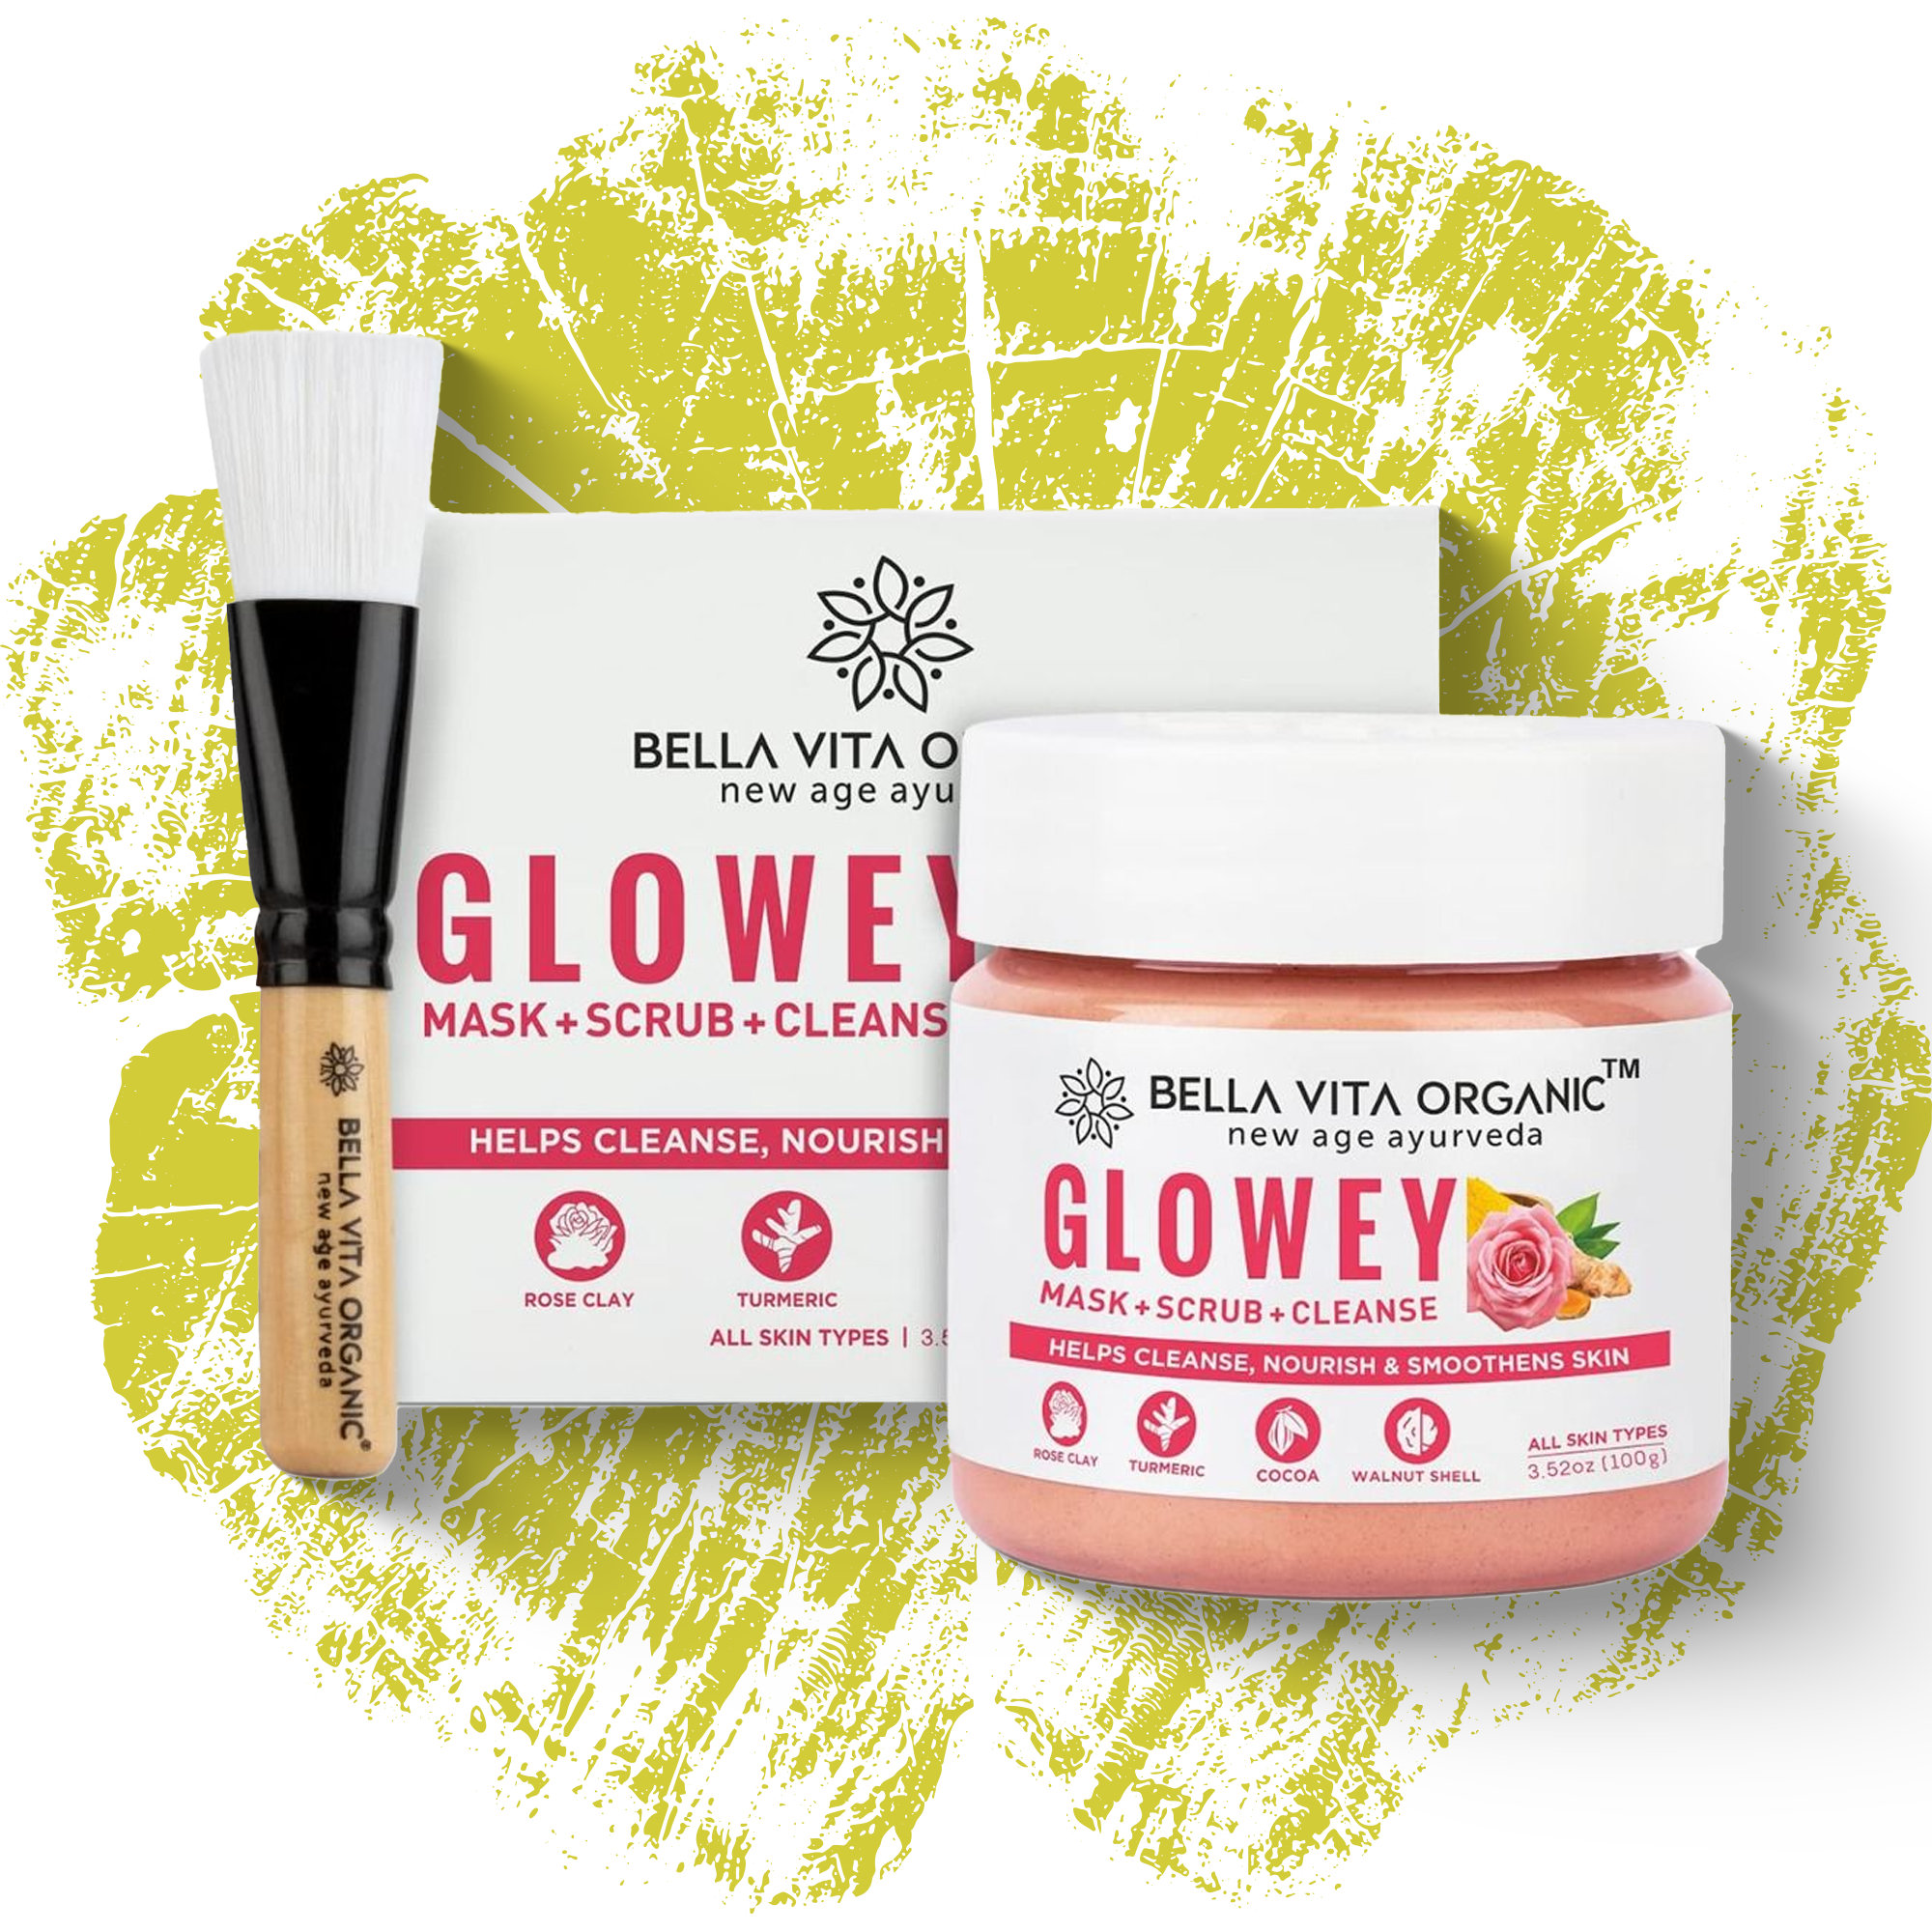 Bella Vita Organic Glowey Face Mask+Scrub+Cleanse